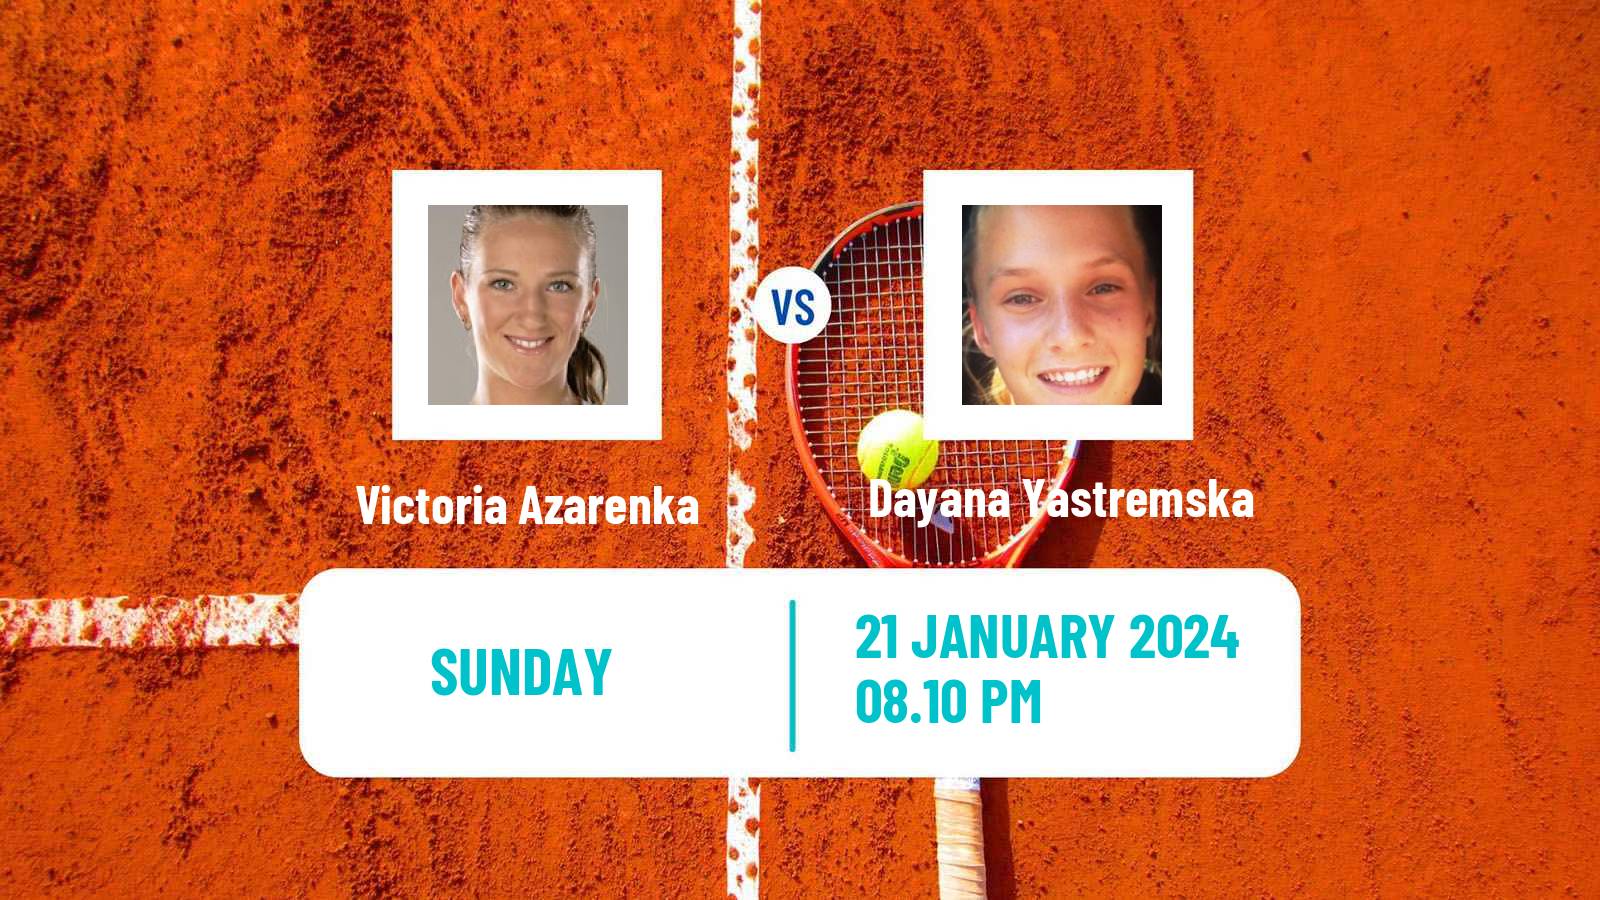 Tennis WTA Australian Open Victoria Azarenka - Dayana Yastremska